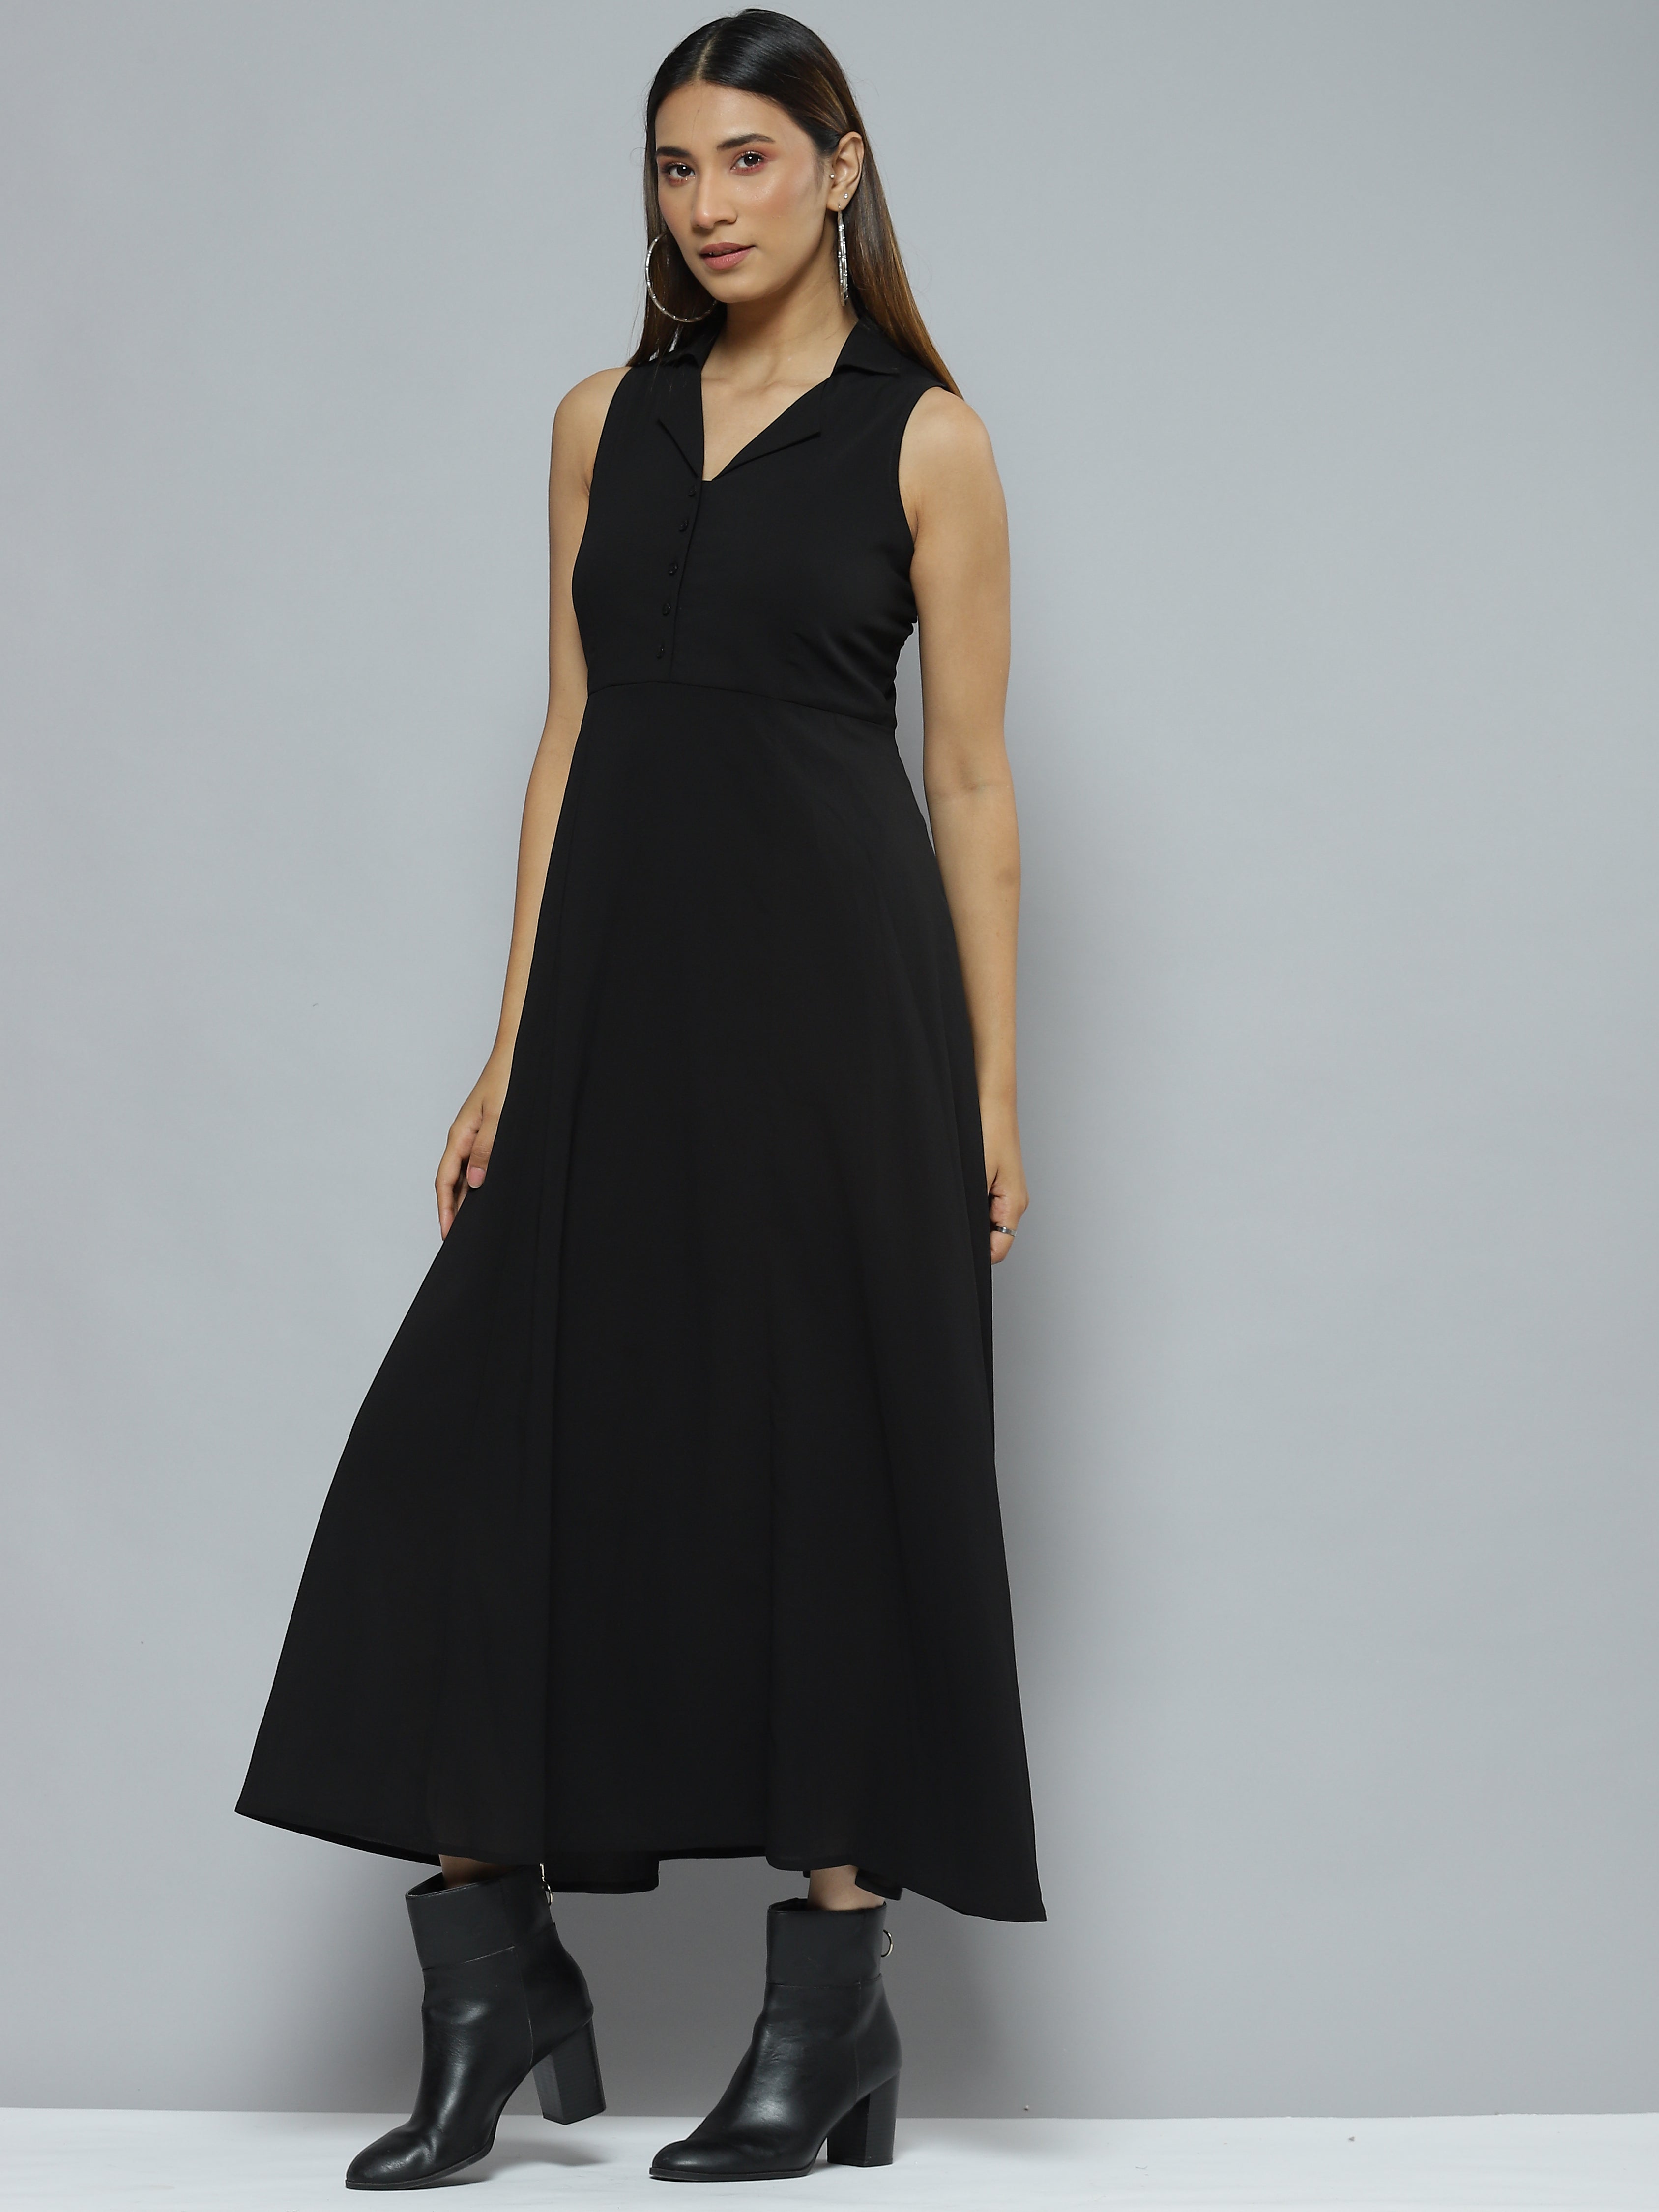 Black and White Georgette Dress – Fulton Douglas